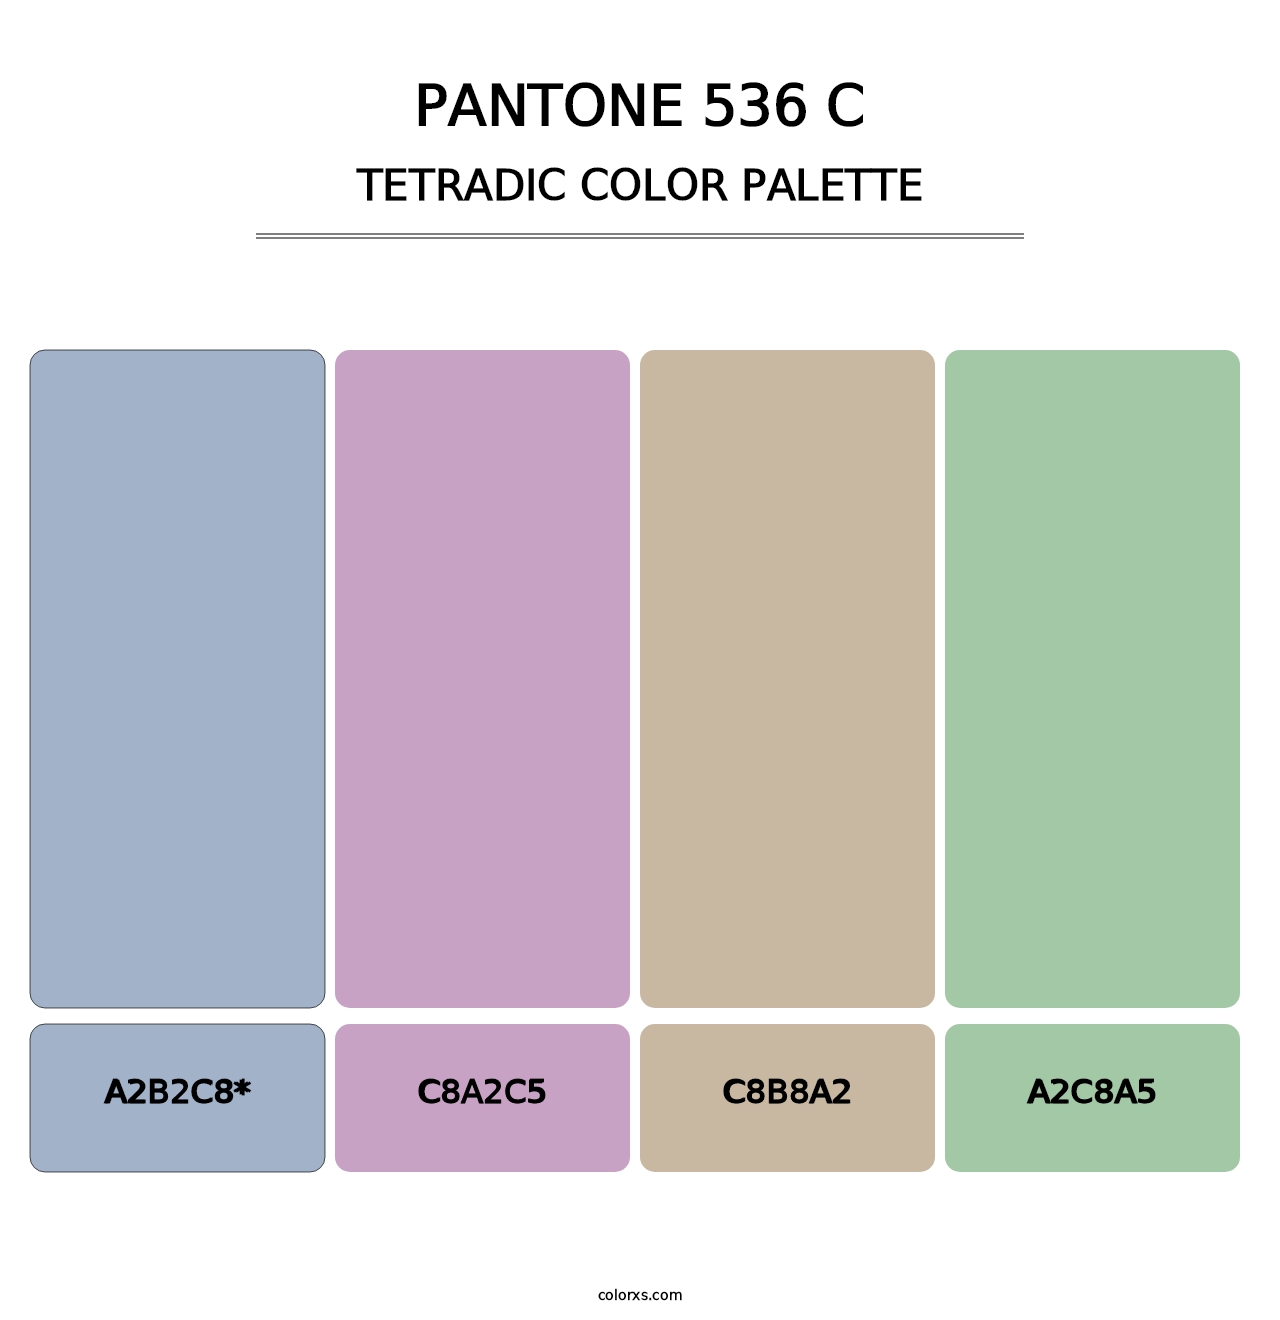 PANTONE 536 C - Tetradic Color Palette